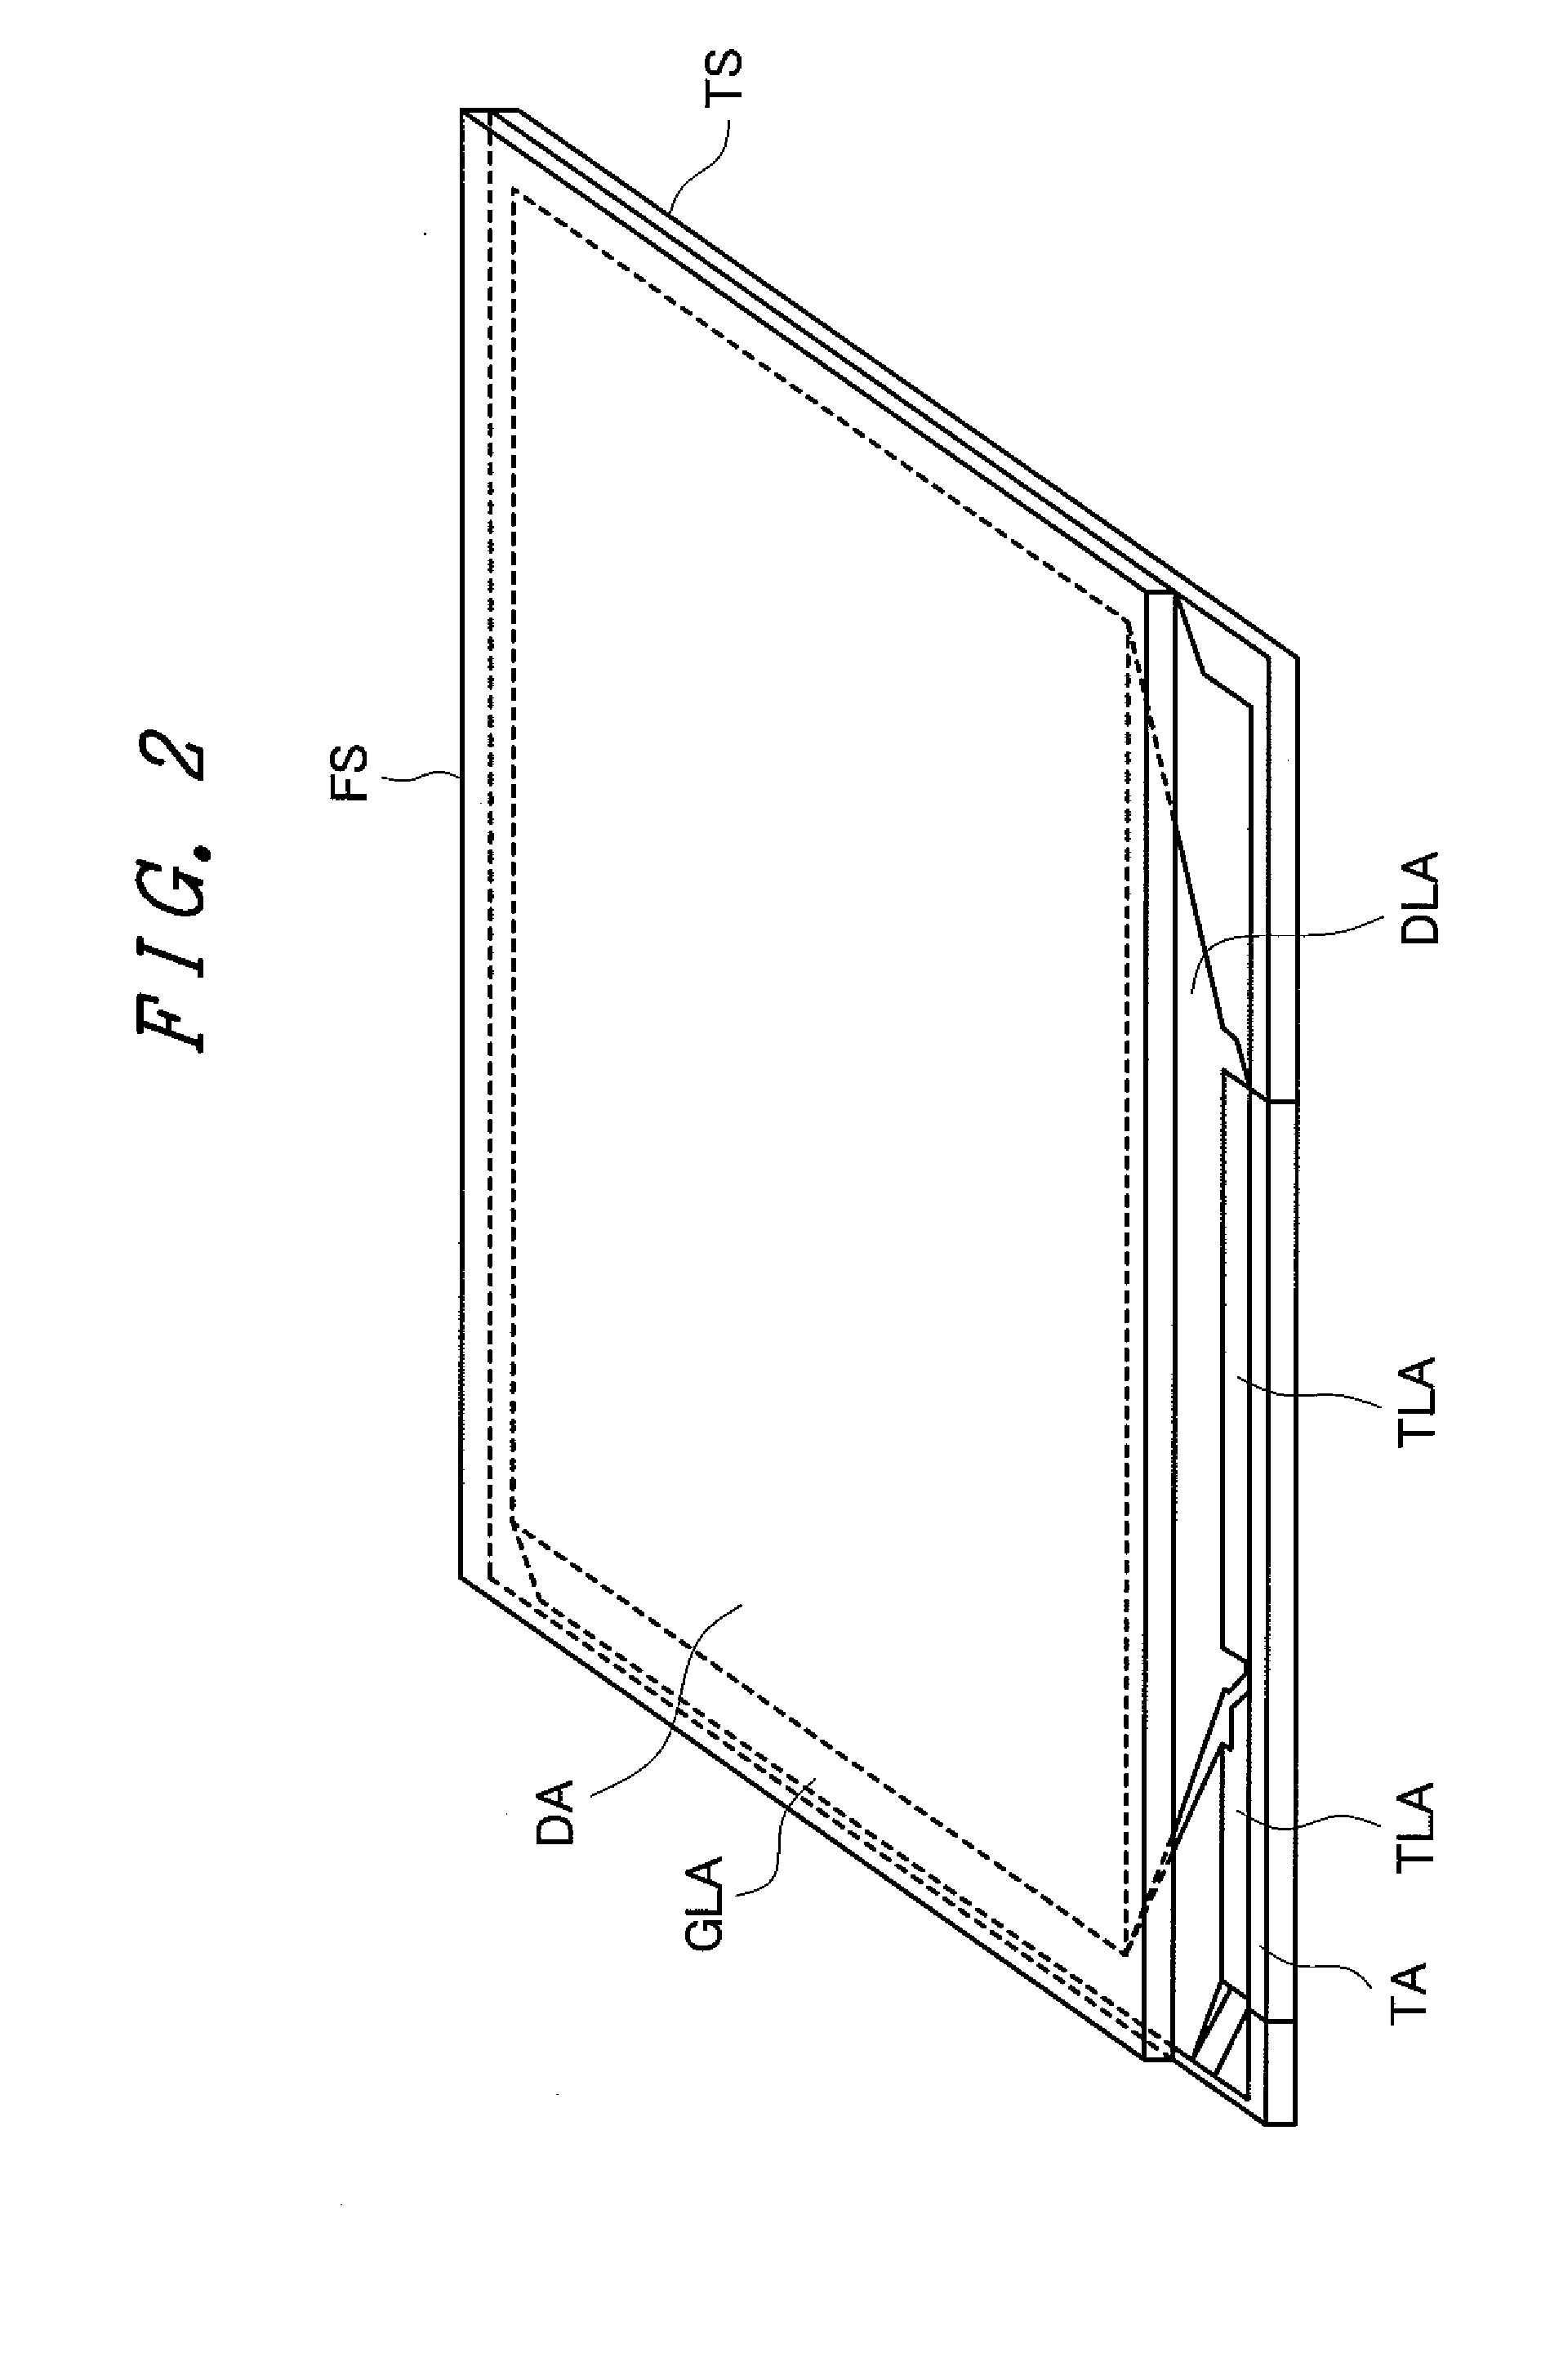 Transparent type liquid crystal display device